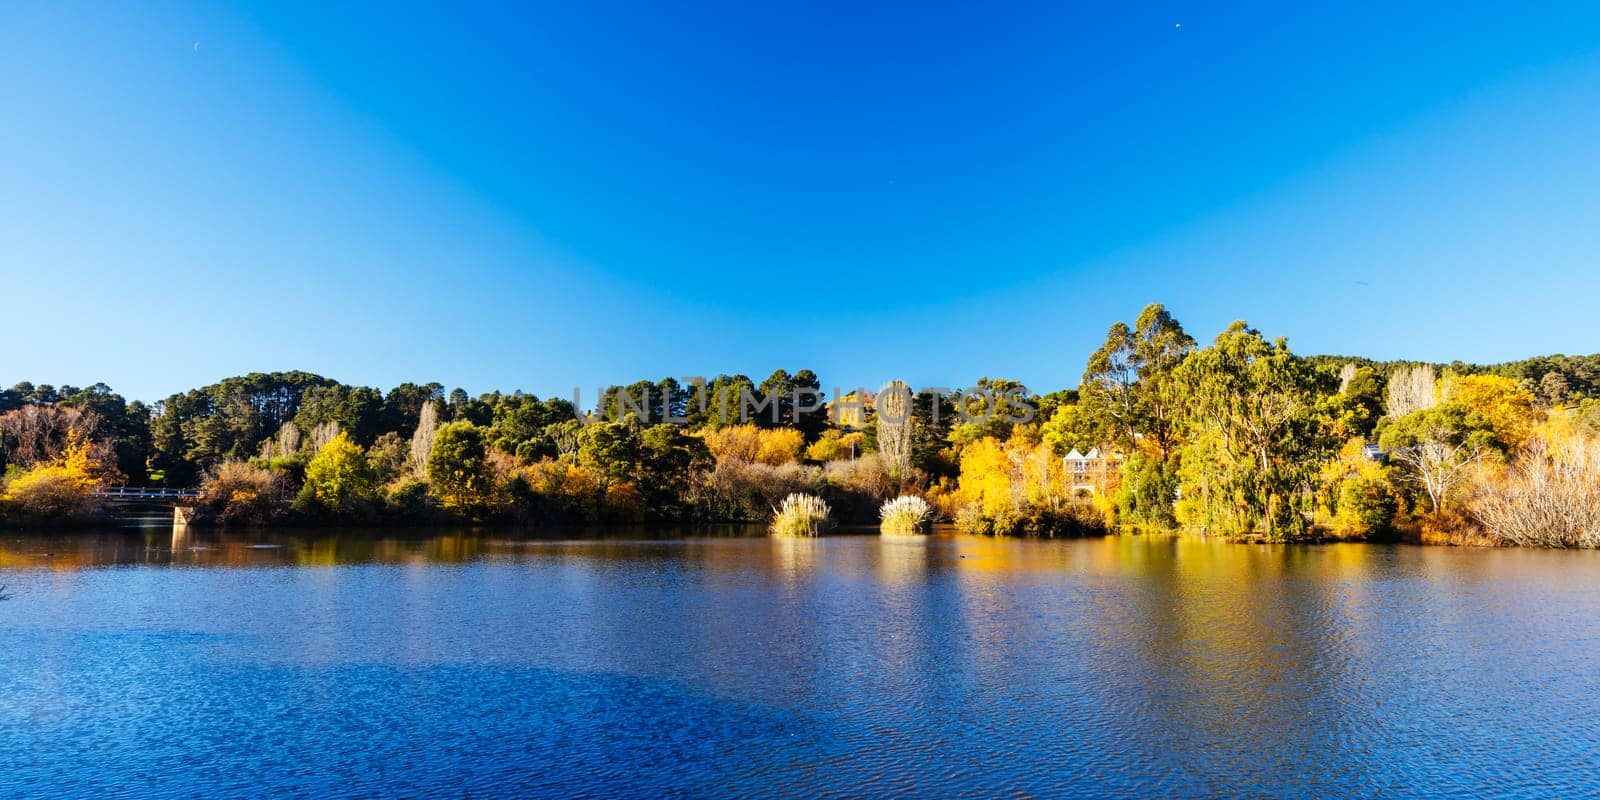 Lake Daylesford in Victoria Australia by FiledIMAGE